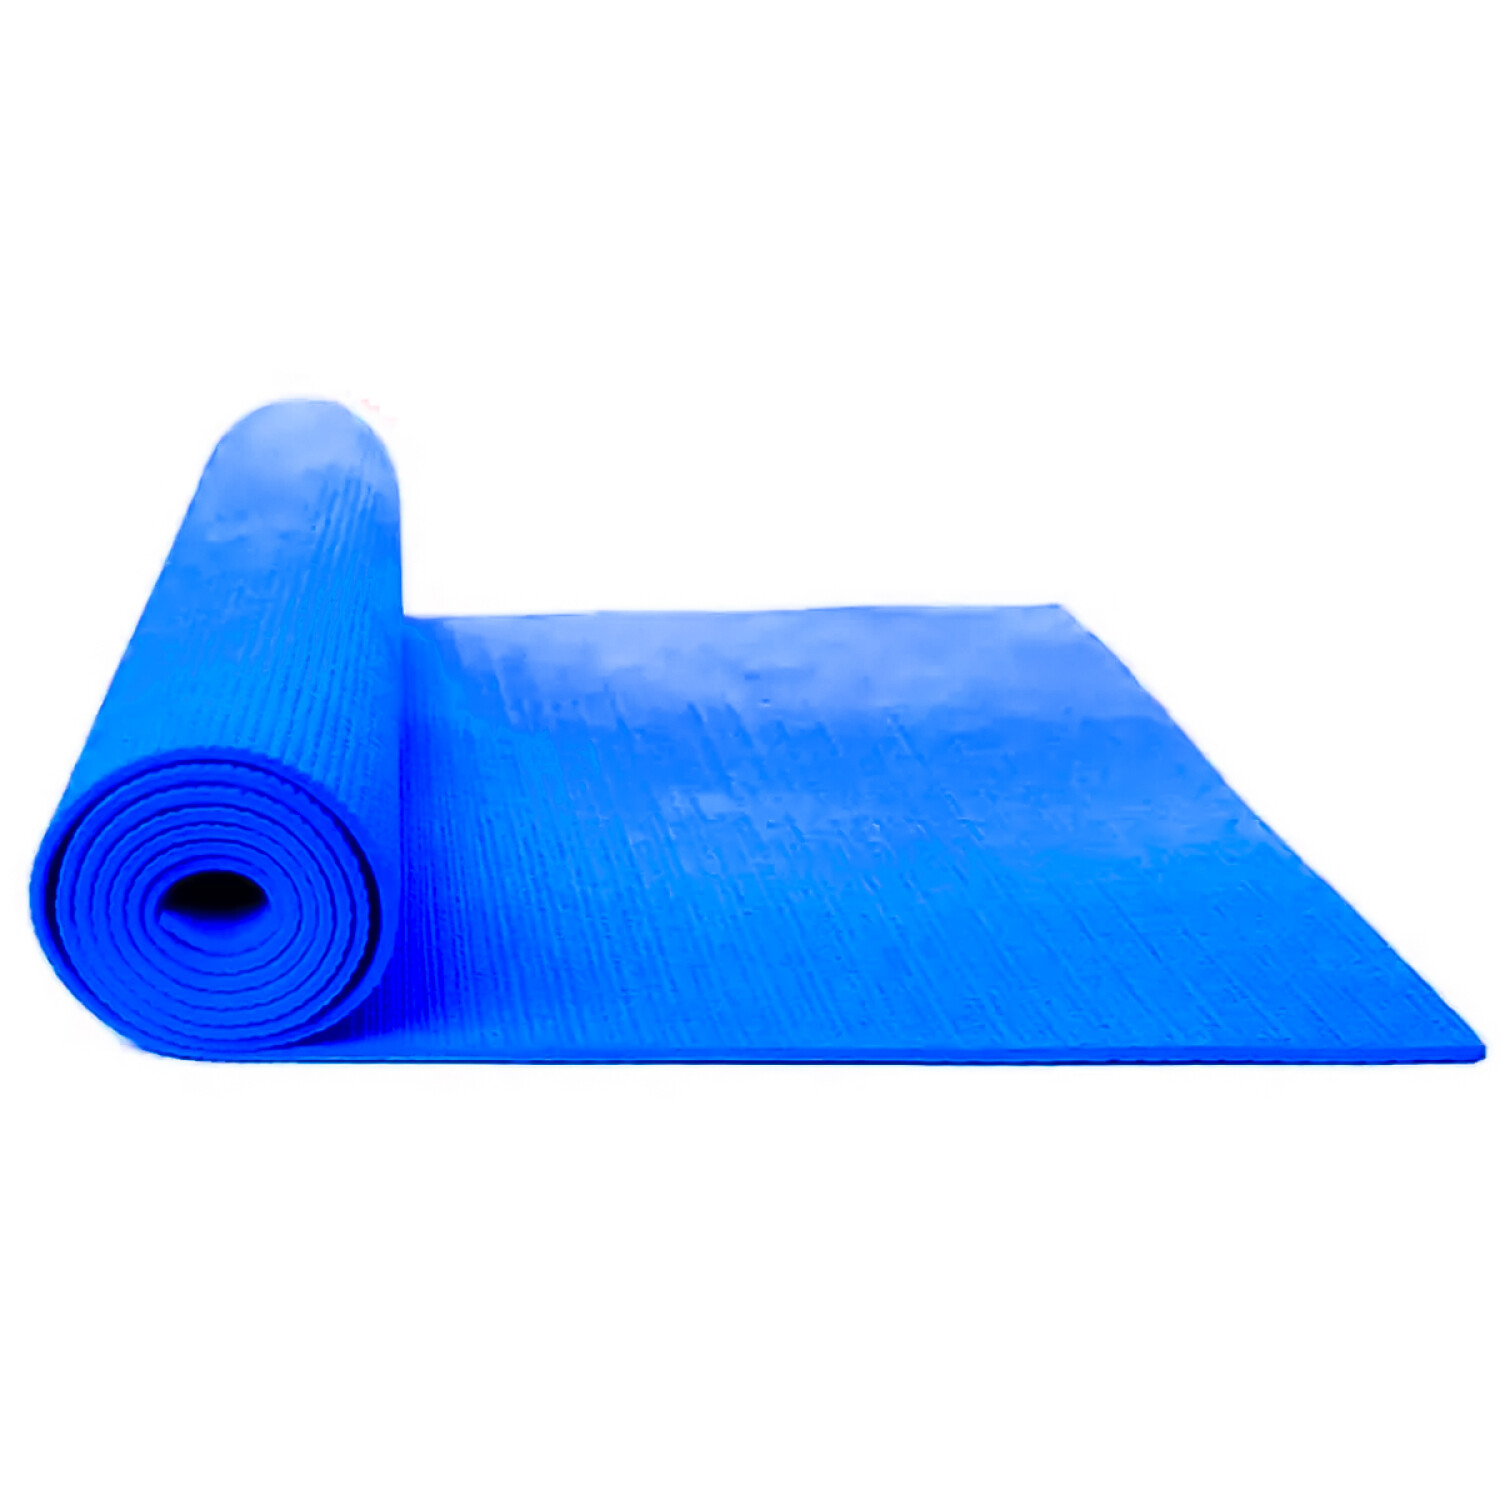 Colchoneta Yoga Pilates Mat 7mm Manta Enrollable Fitness